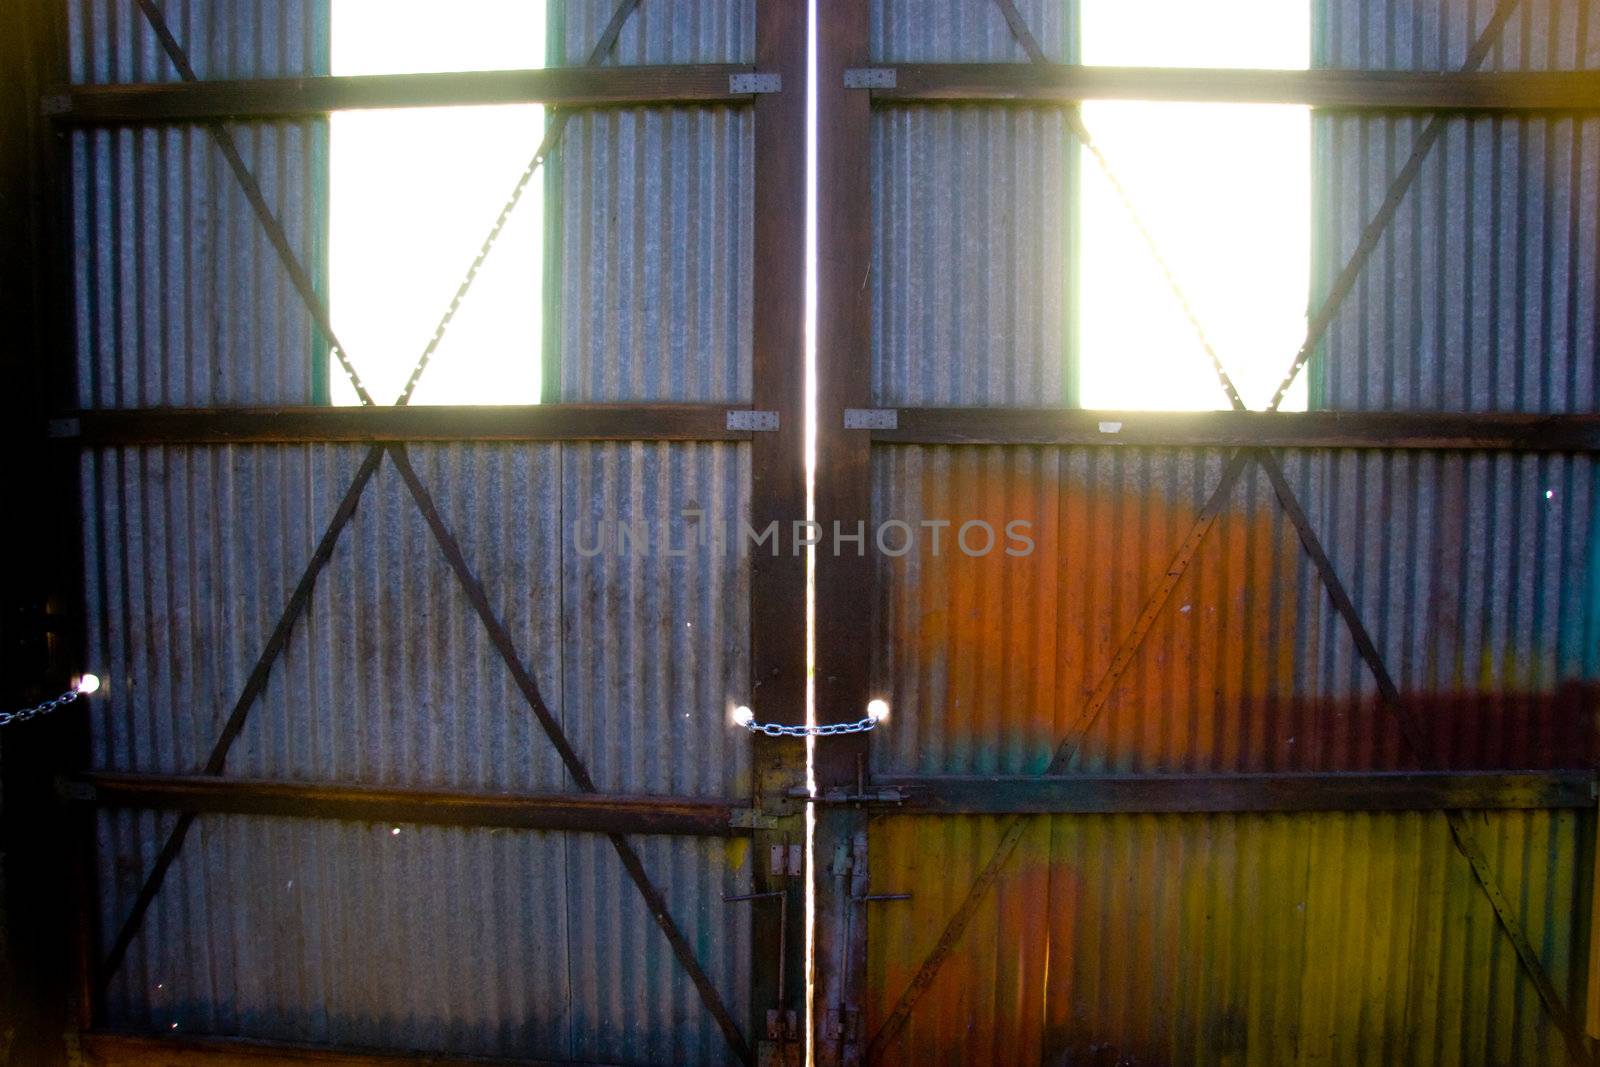 Warehouse Doors by joshuaraineyphotography